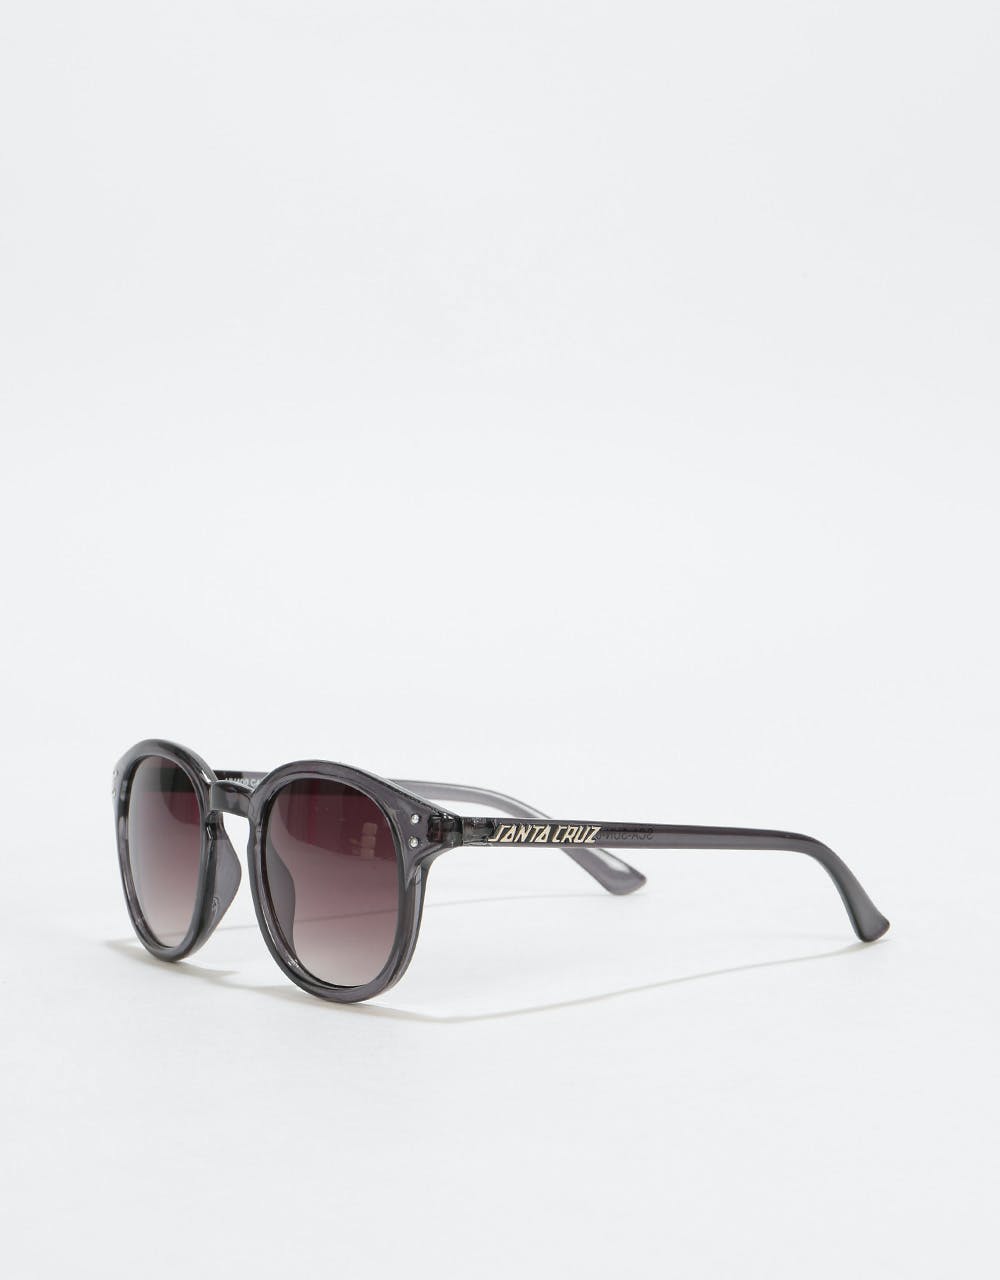 Santa Cruz Watson Sunglasses - Black